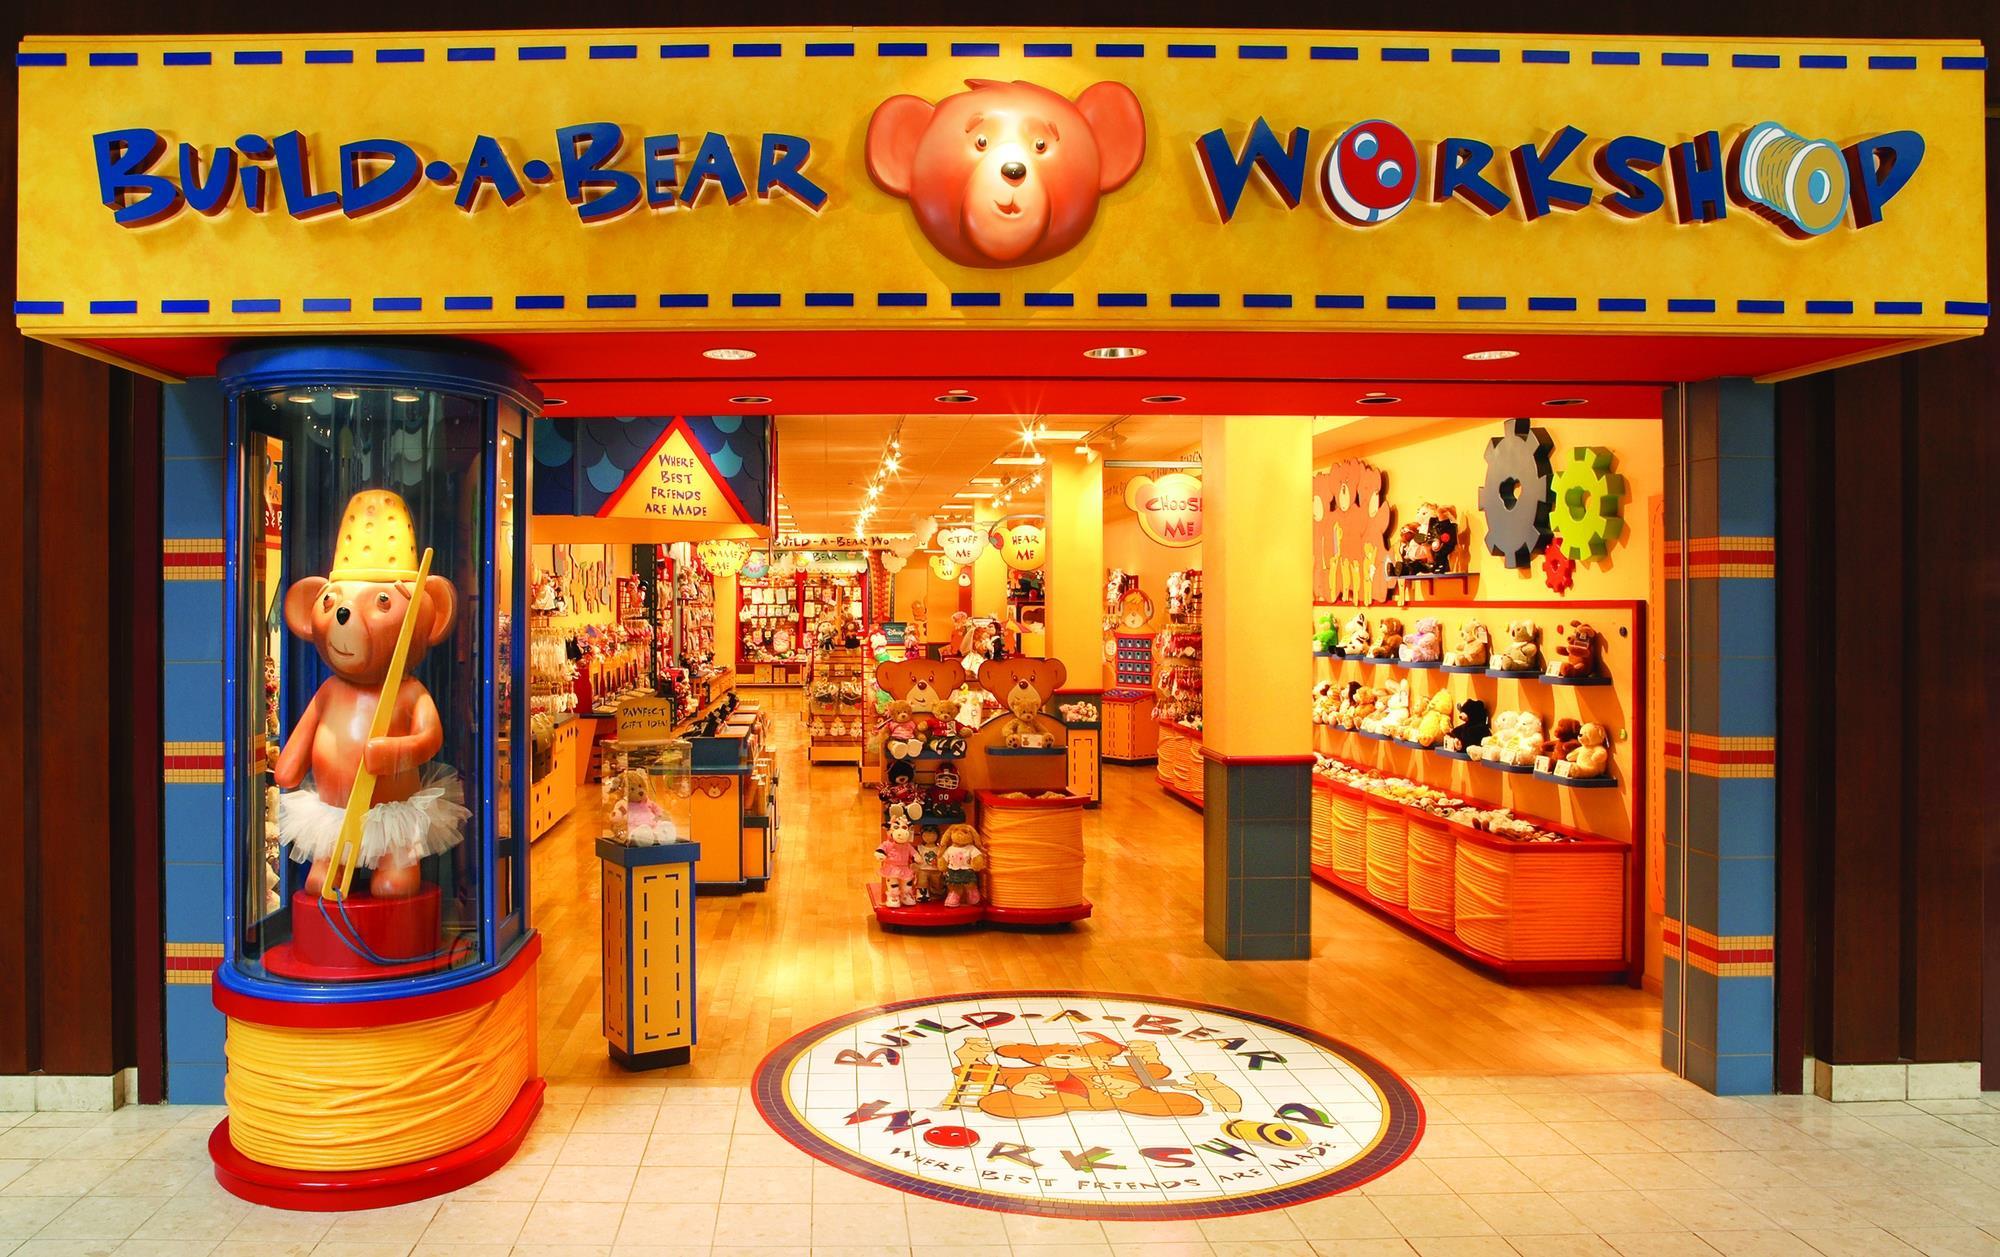 Build-a-Bear Workshop: The bear necessities | Analysis | Retail Week